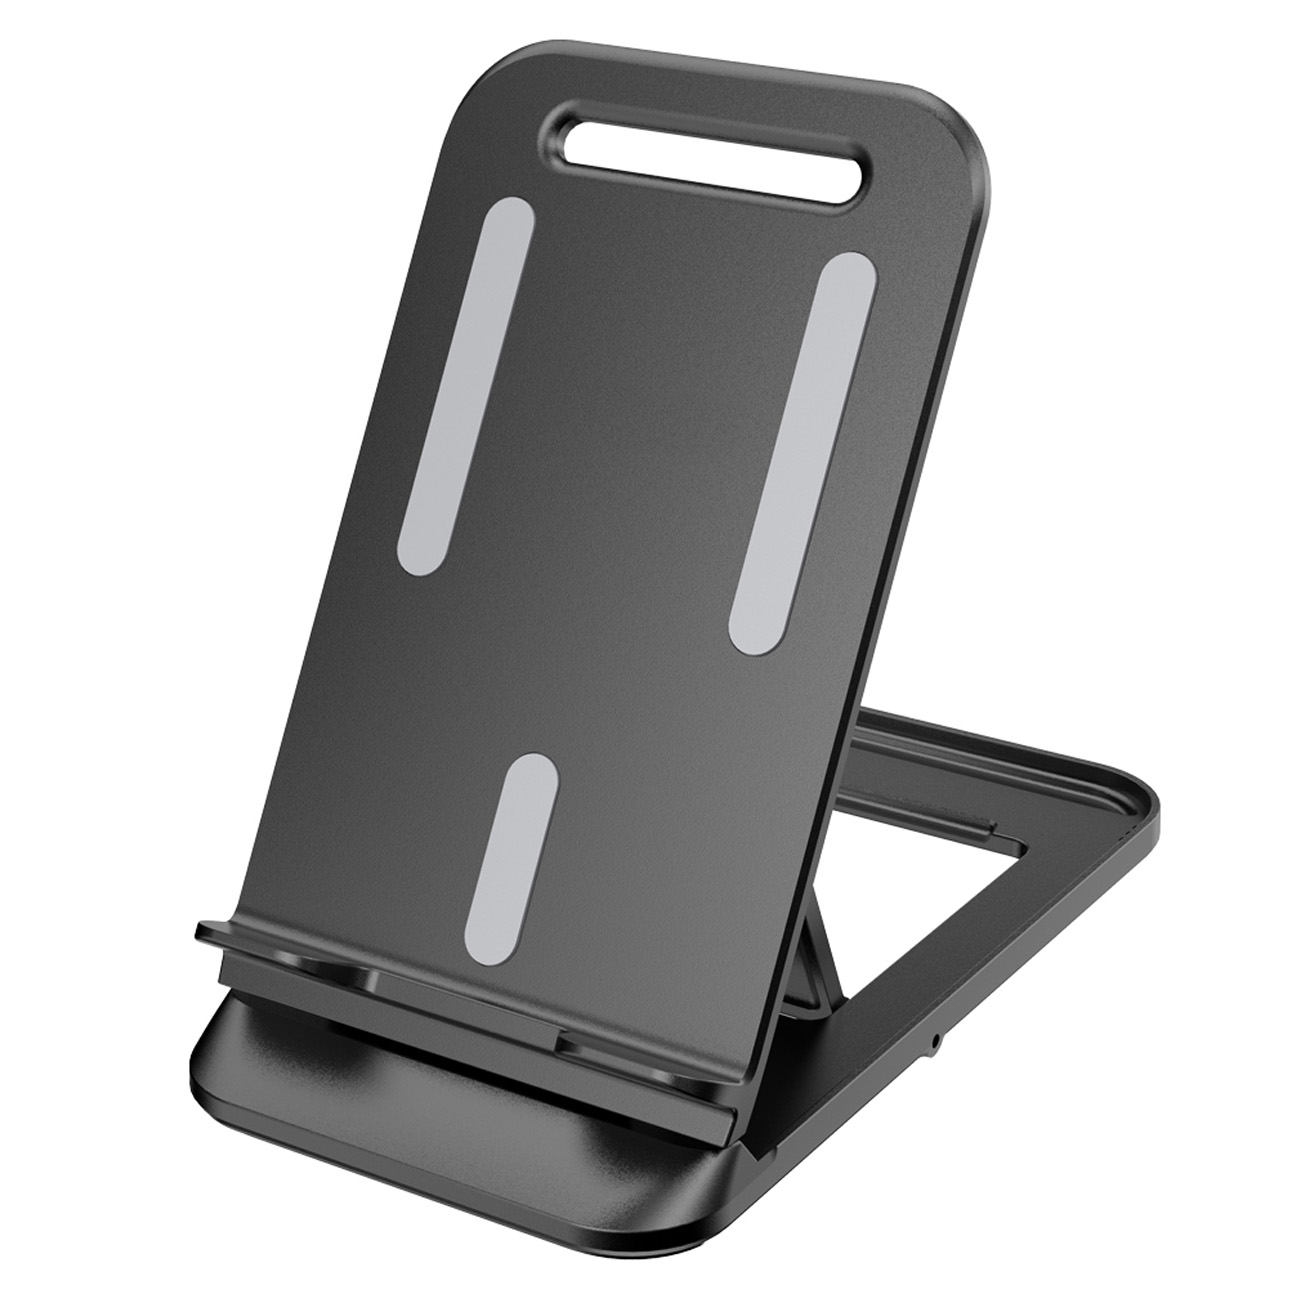 Universal foldable standing stand - black K10 black (9145576277881) Selfie Stick